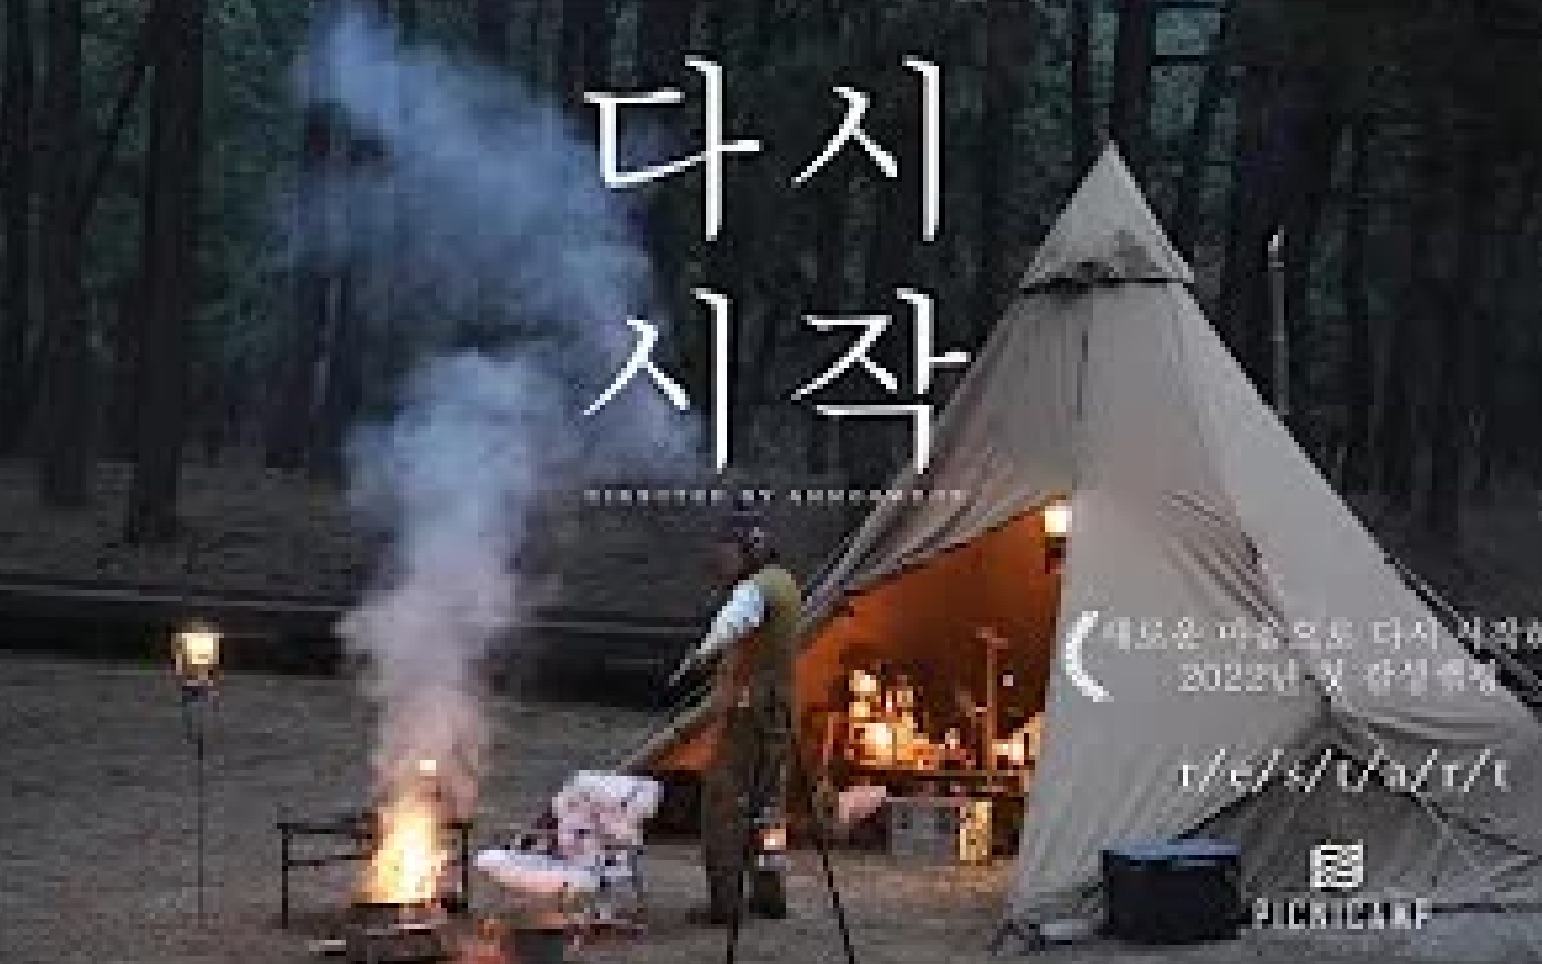 【solo camping】森林营地露营，燃起的火炉引来了一群小猫，帐篷内的温暖度过了一夜。